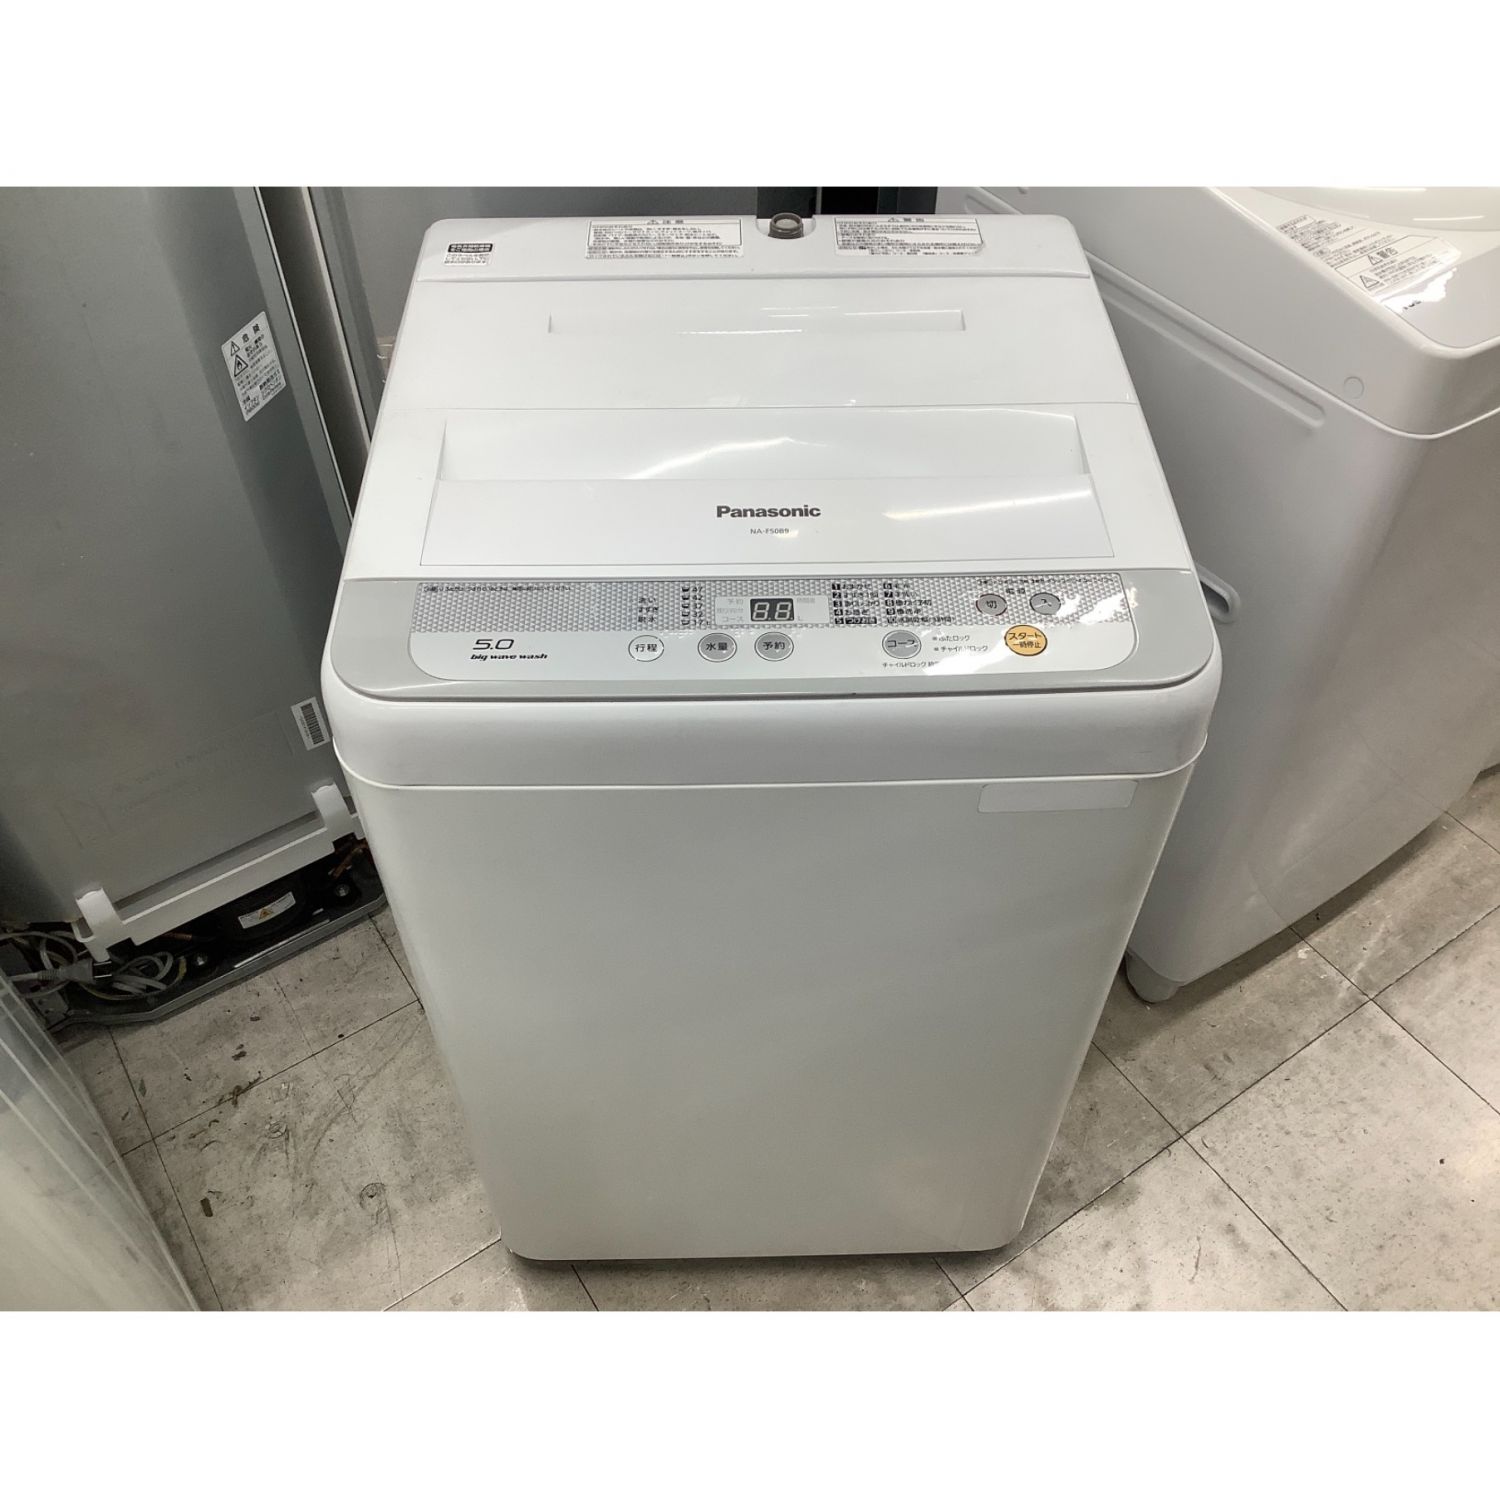 Panasonic (パナソニック) 洗濯機 5.0kg NA-F50B9 2016年製 程度B(軽度 